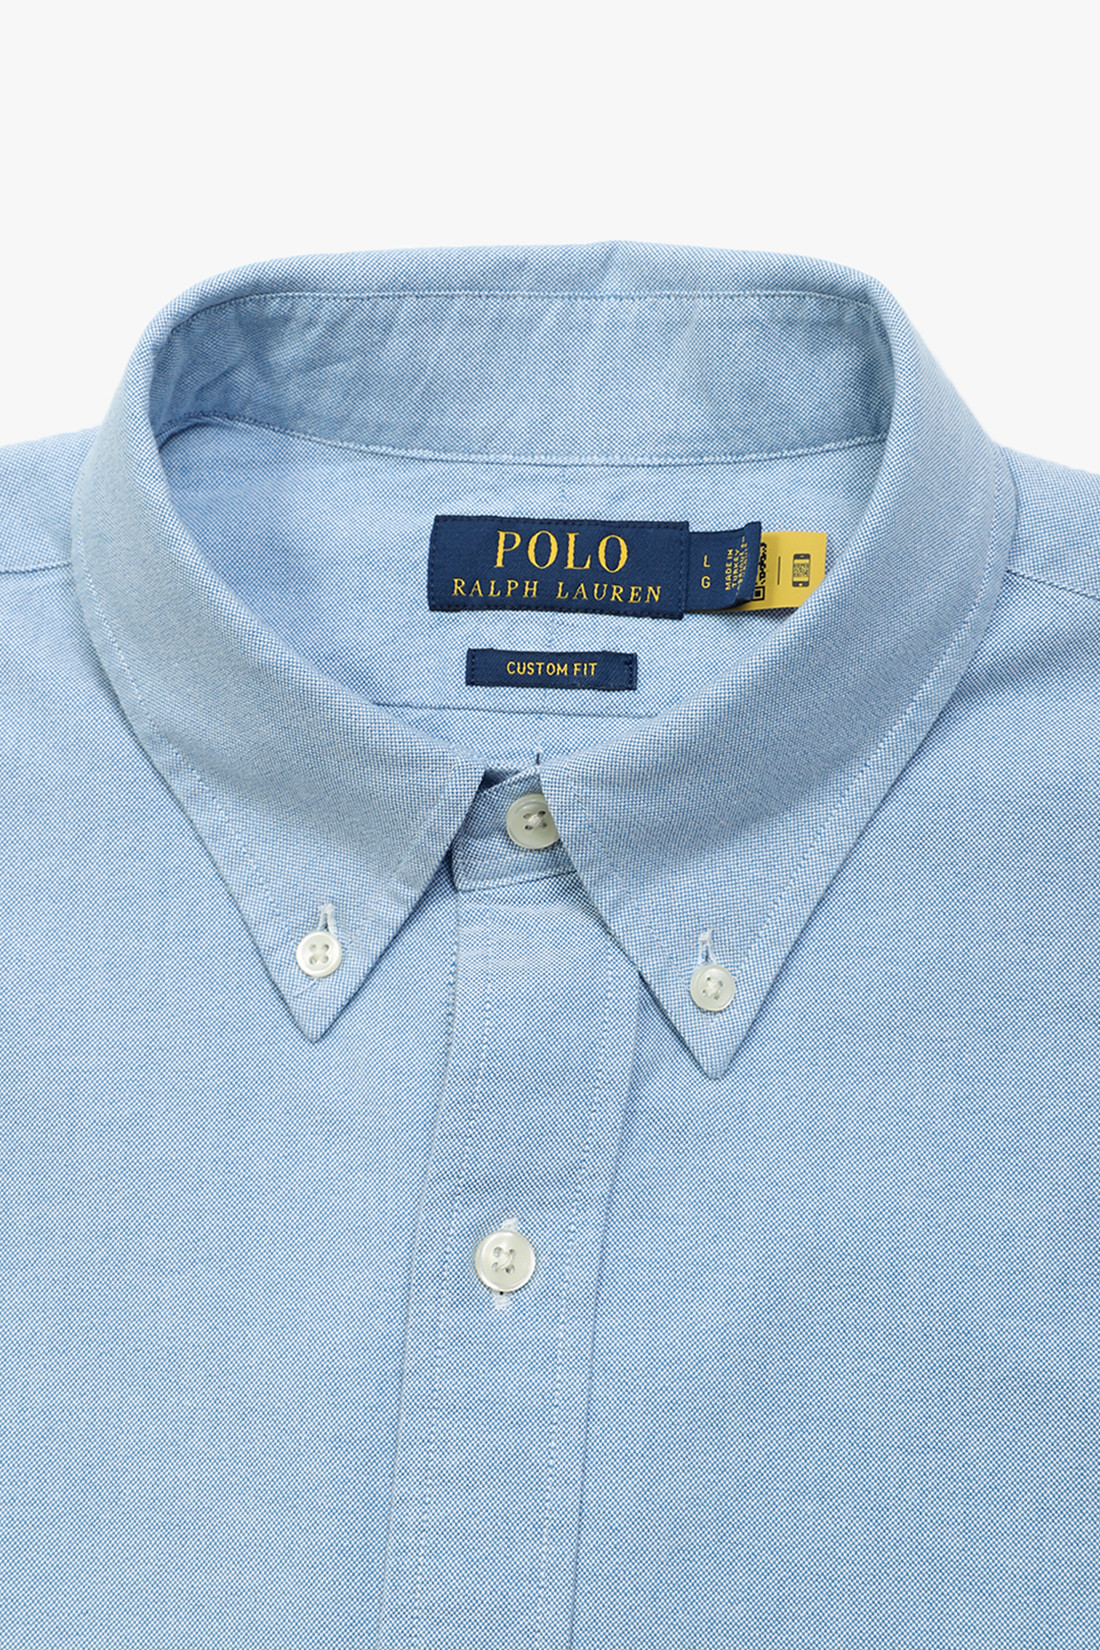 Polo ralph lauren Custom fit oxford shirt Blue - GRADUATE STORE